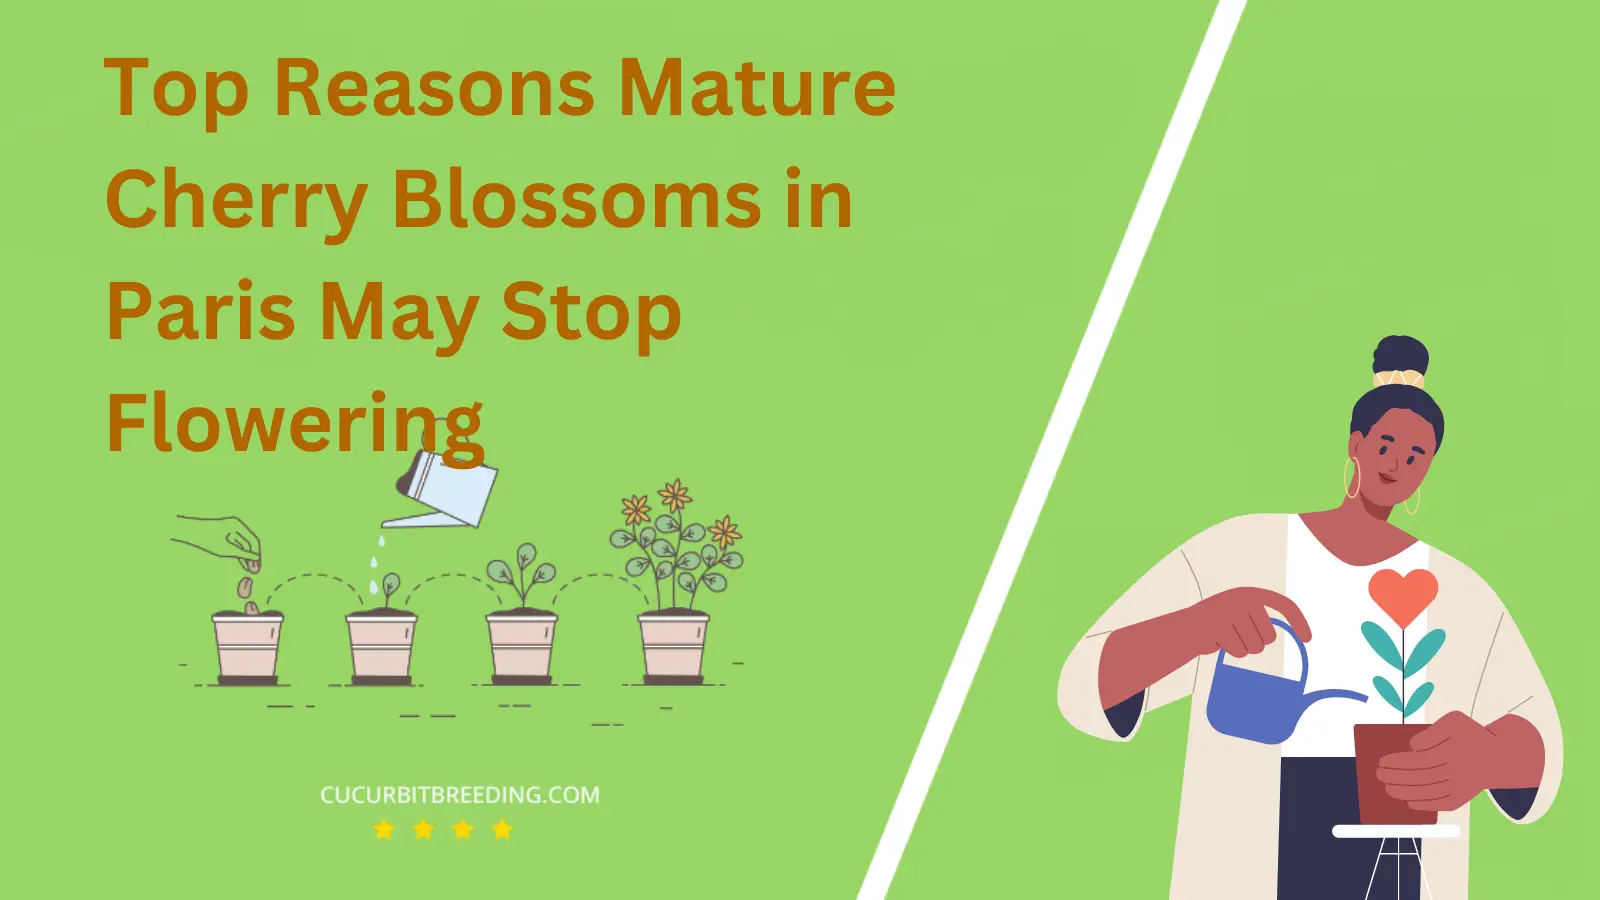 Top Reasons Mature Cherry Blossoms in Paris May Stop Flowering